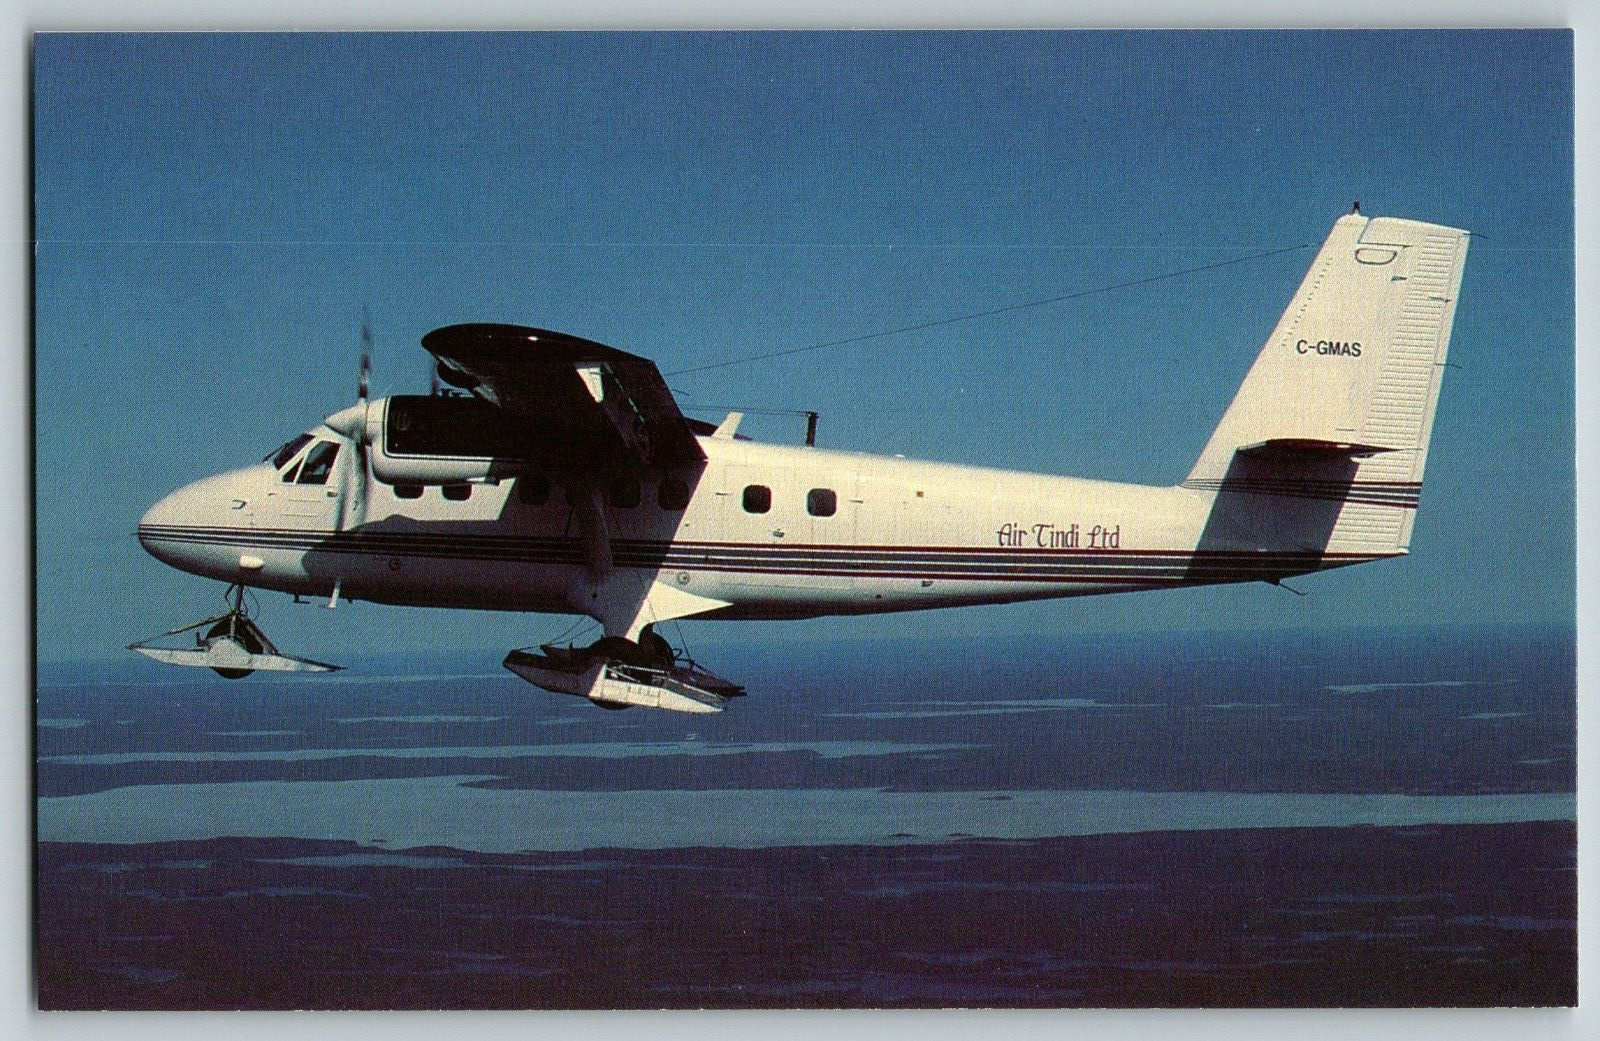 Air Tindi, Ltd. Dehavilland DHC 6 Twin Otter 300 - Airplane - Vintage Postcard